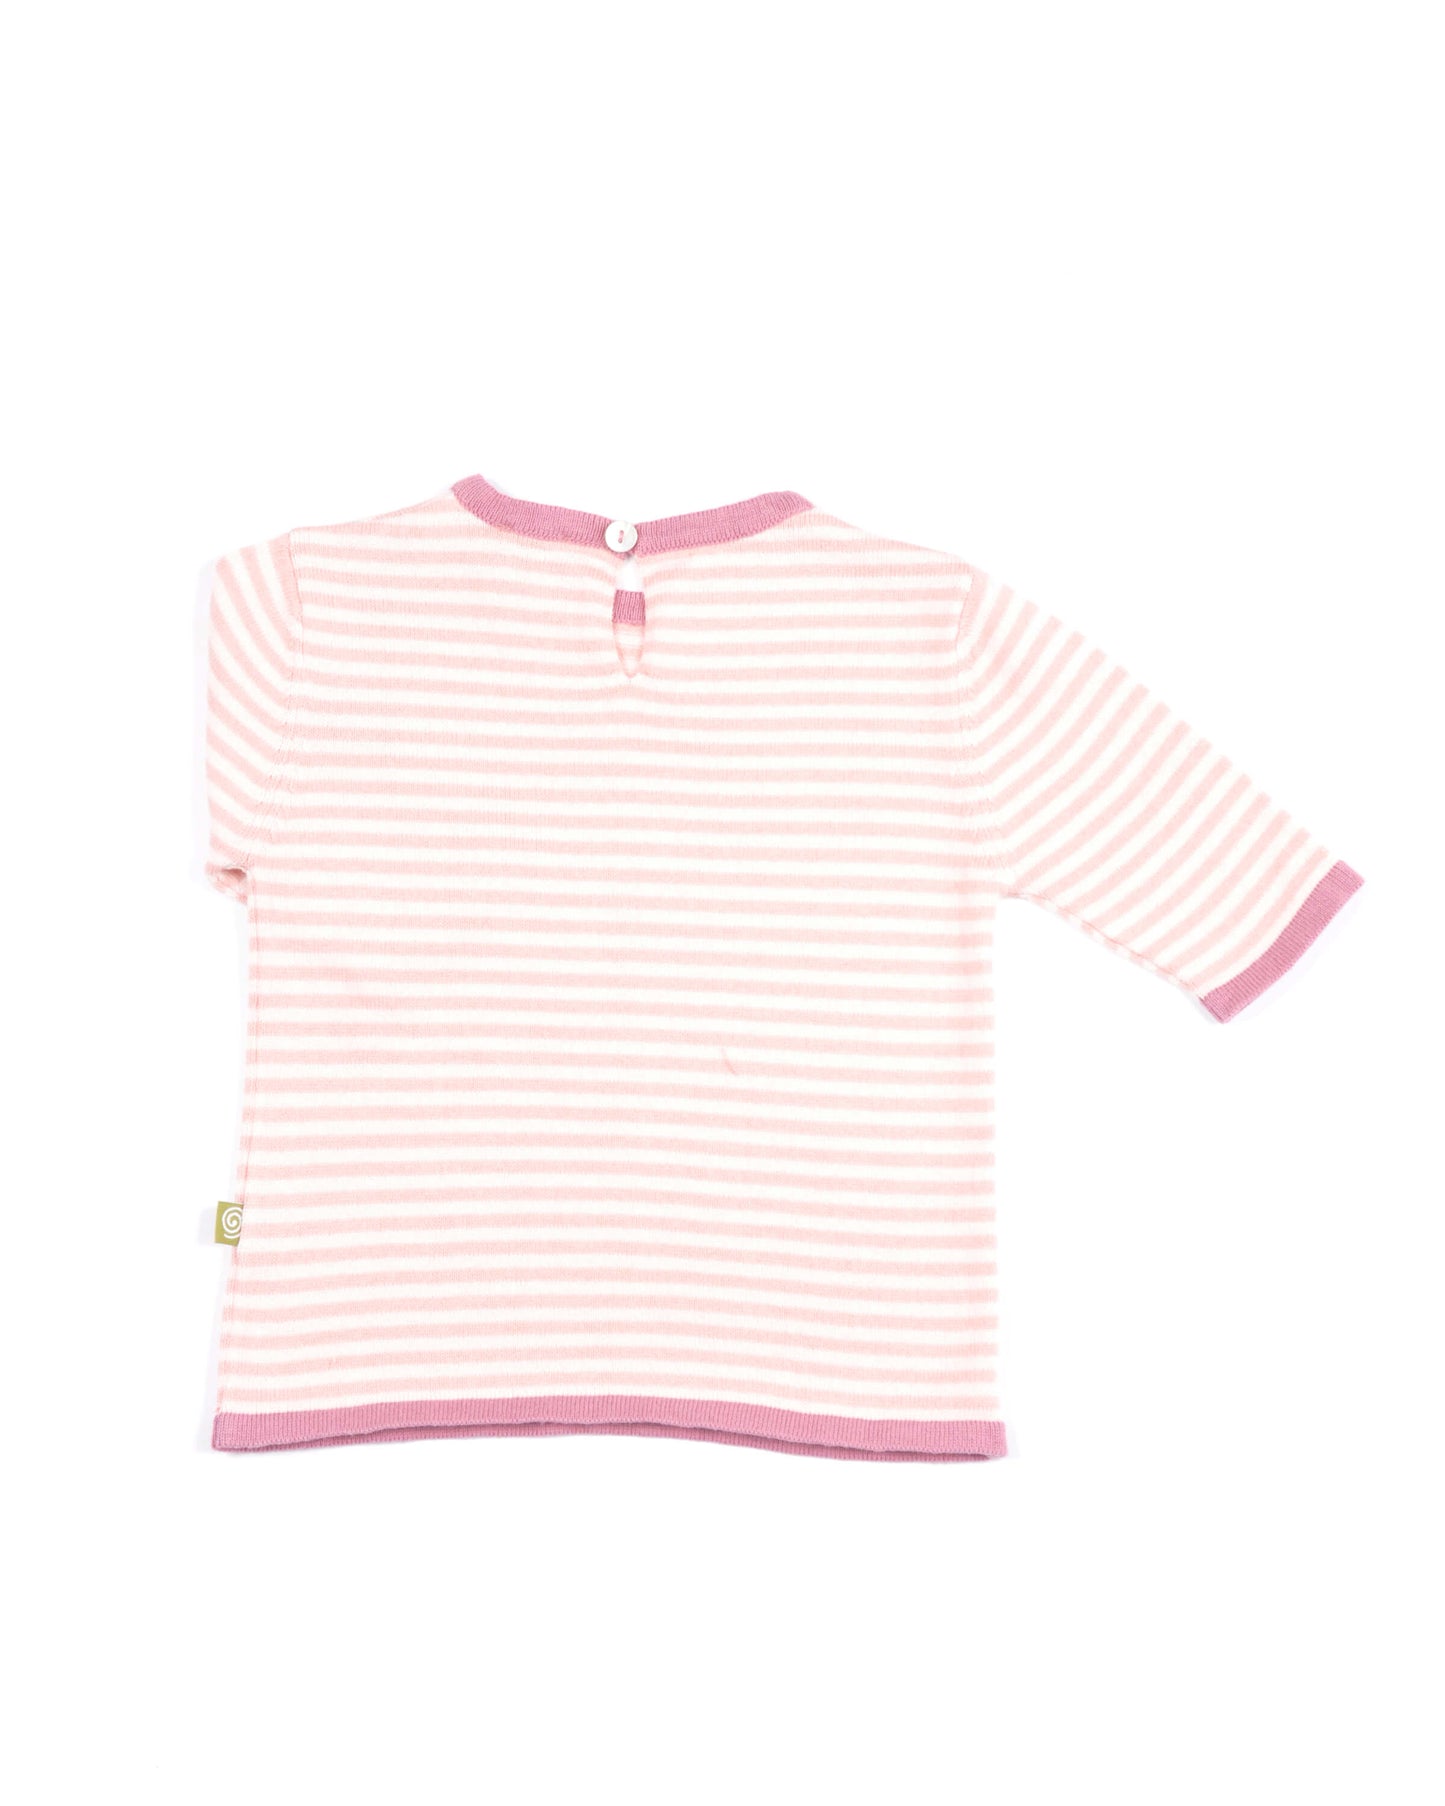 Dottie Top Baby Pink Stripe